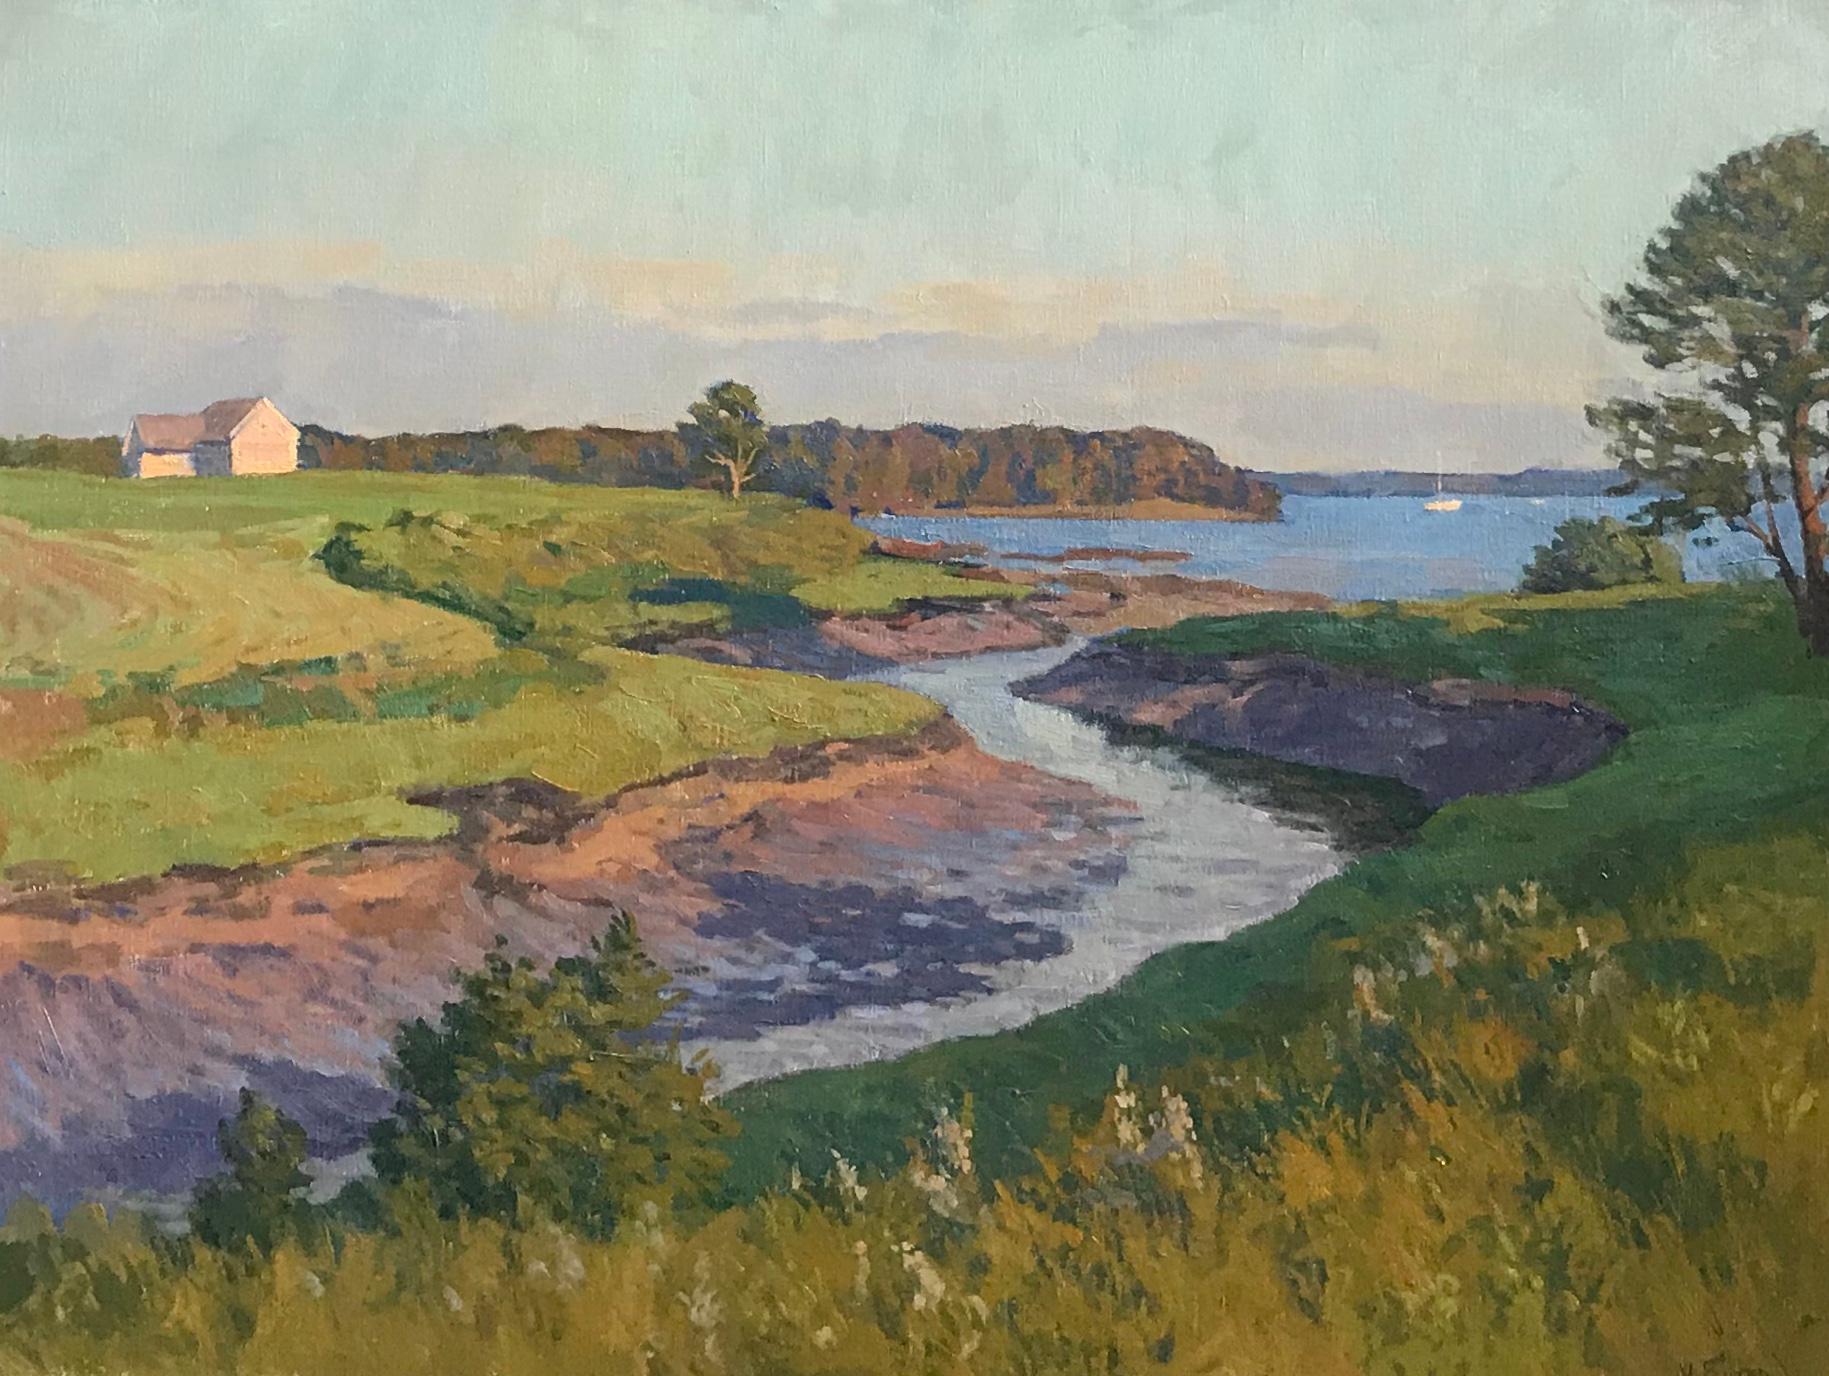 Lowtide, Golden Hour - 2023 Impressionistic Harbor - plein air painting